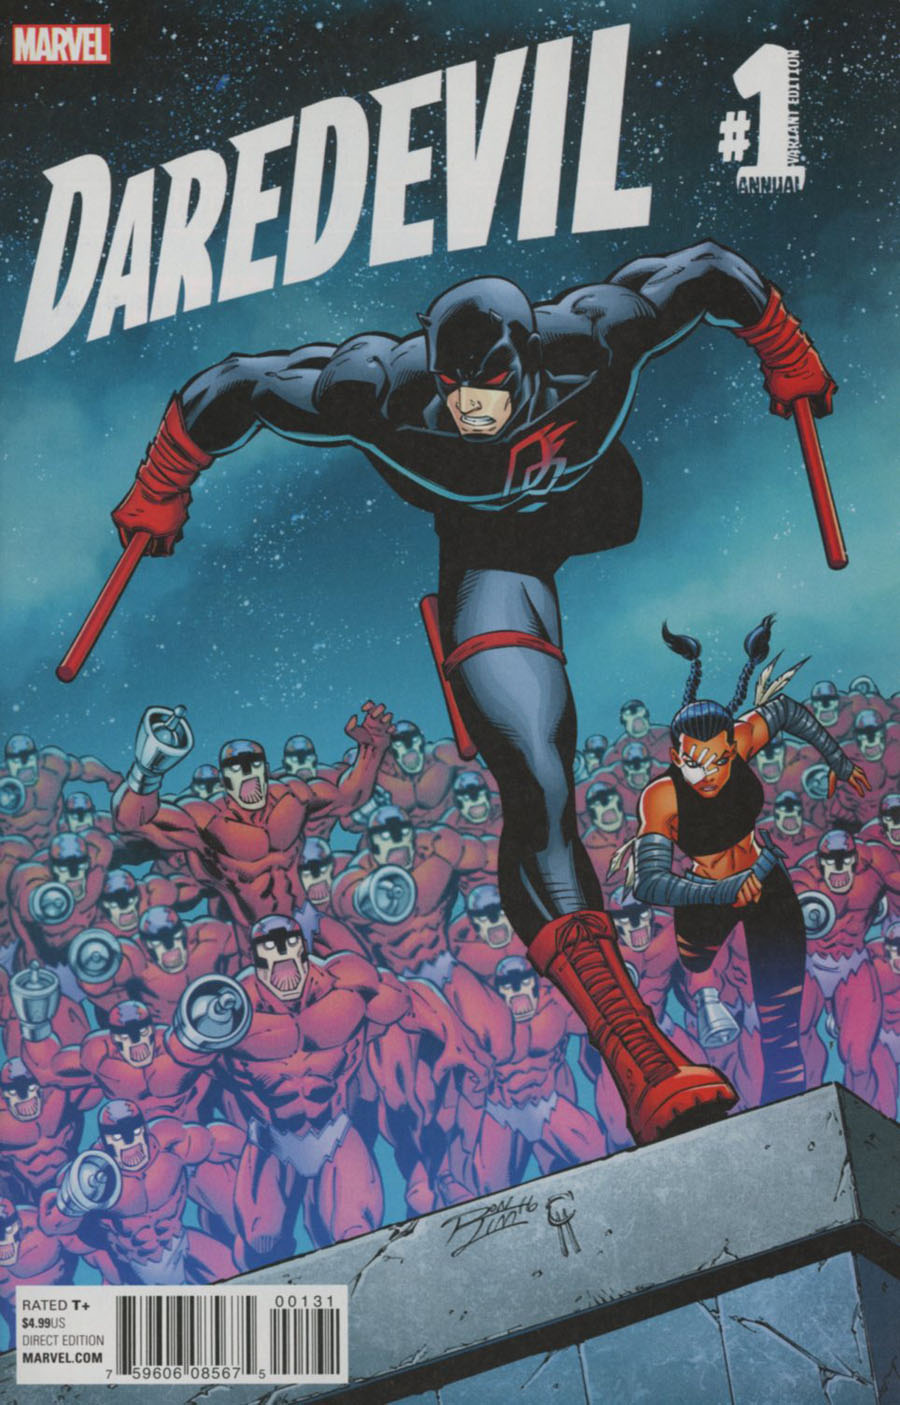 Daredevil Vol 5 Annual #1 2016 Cover C Variant Ron Lim Cover